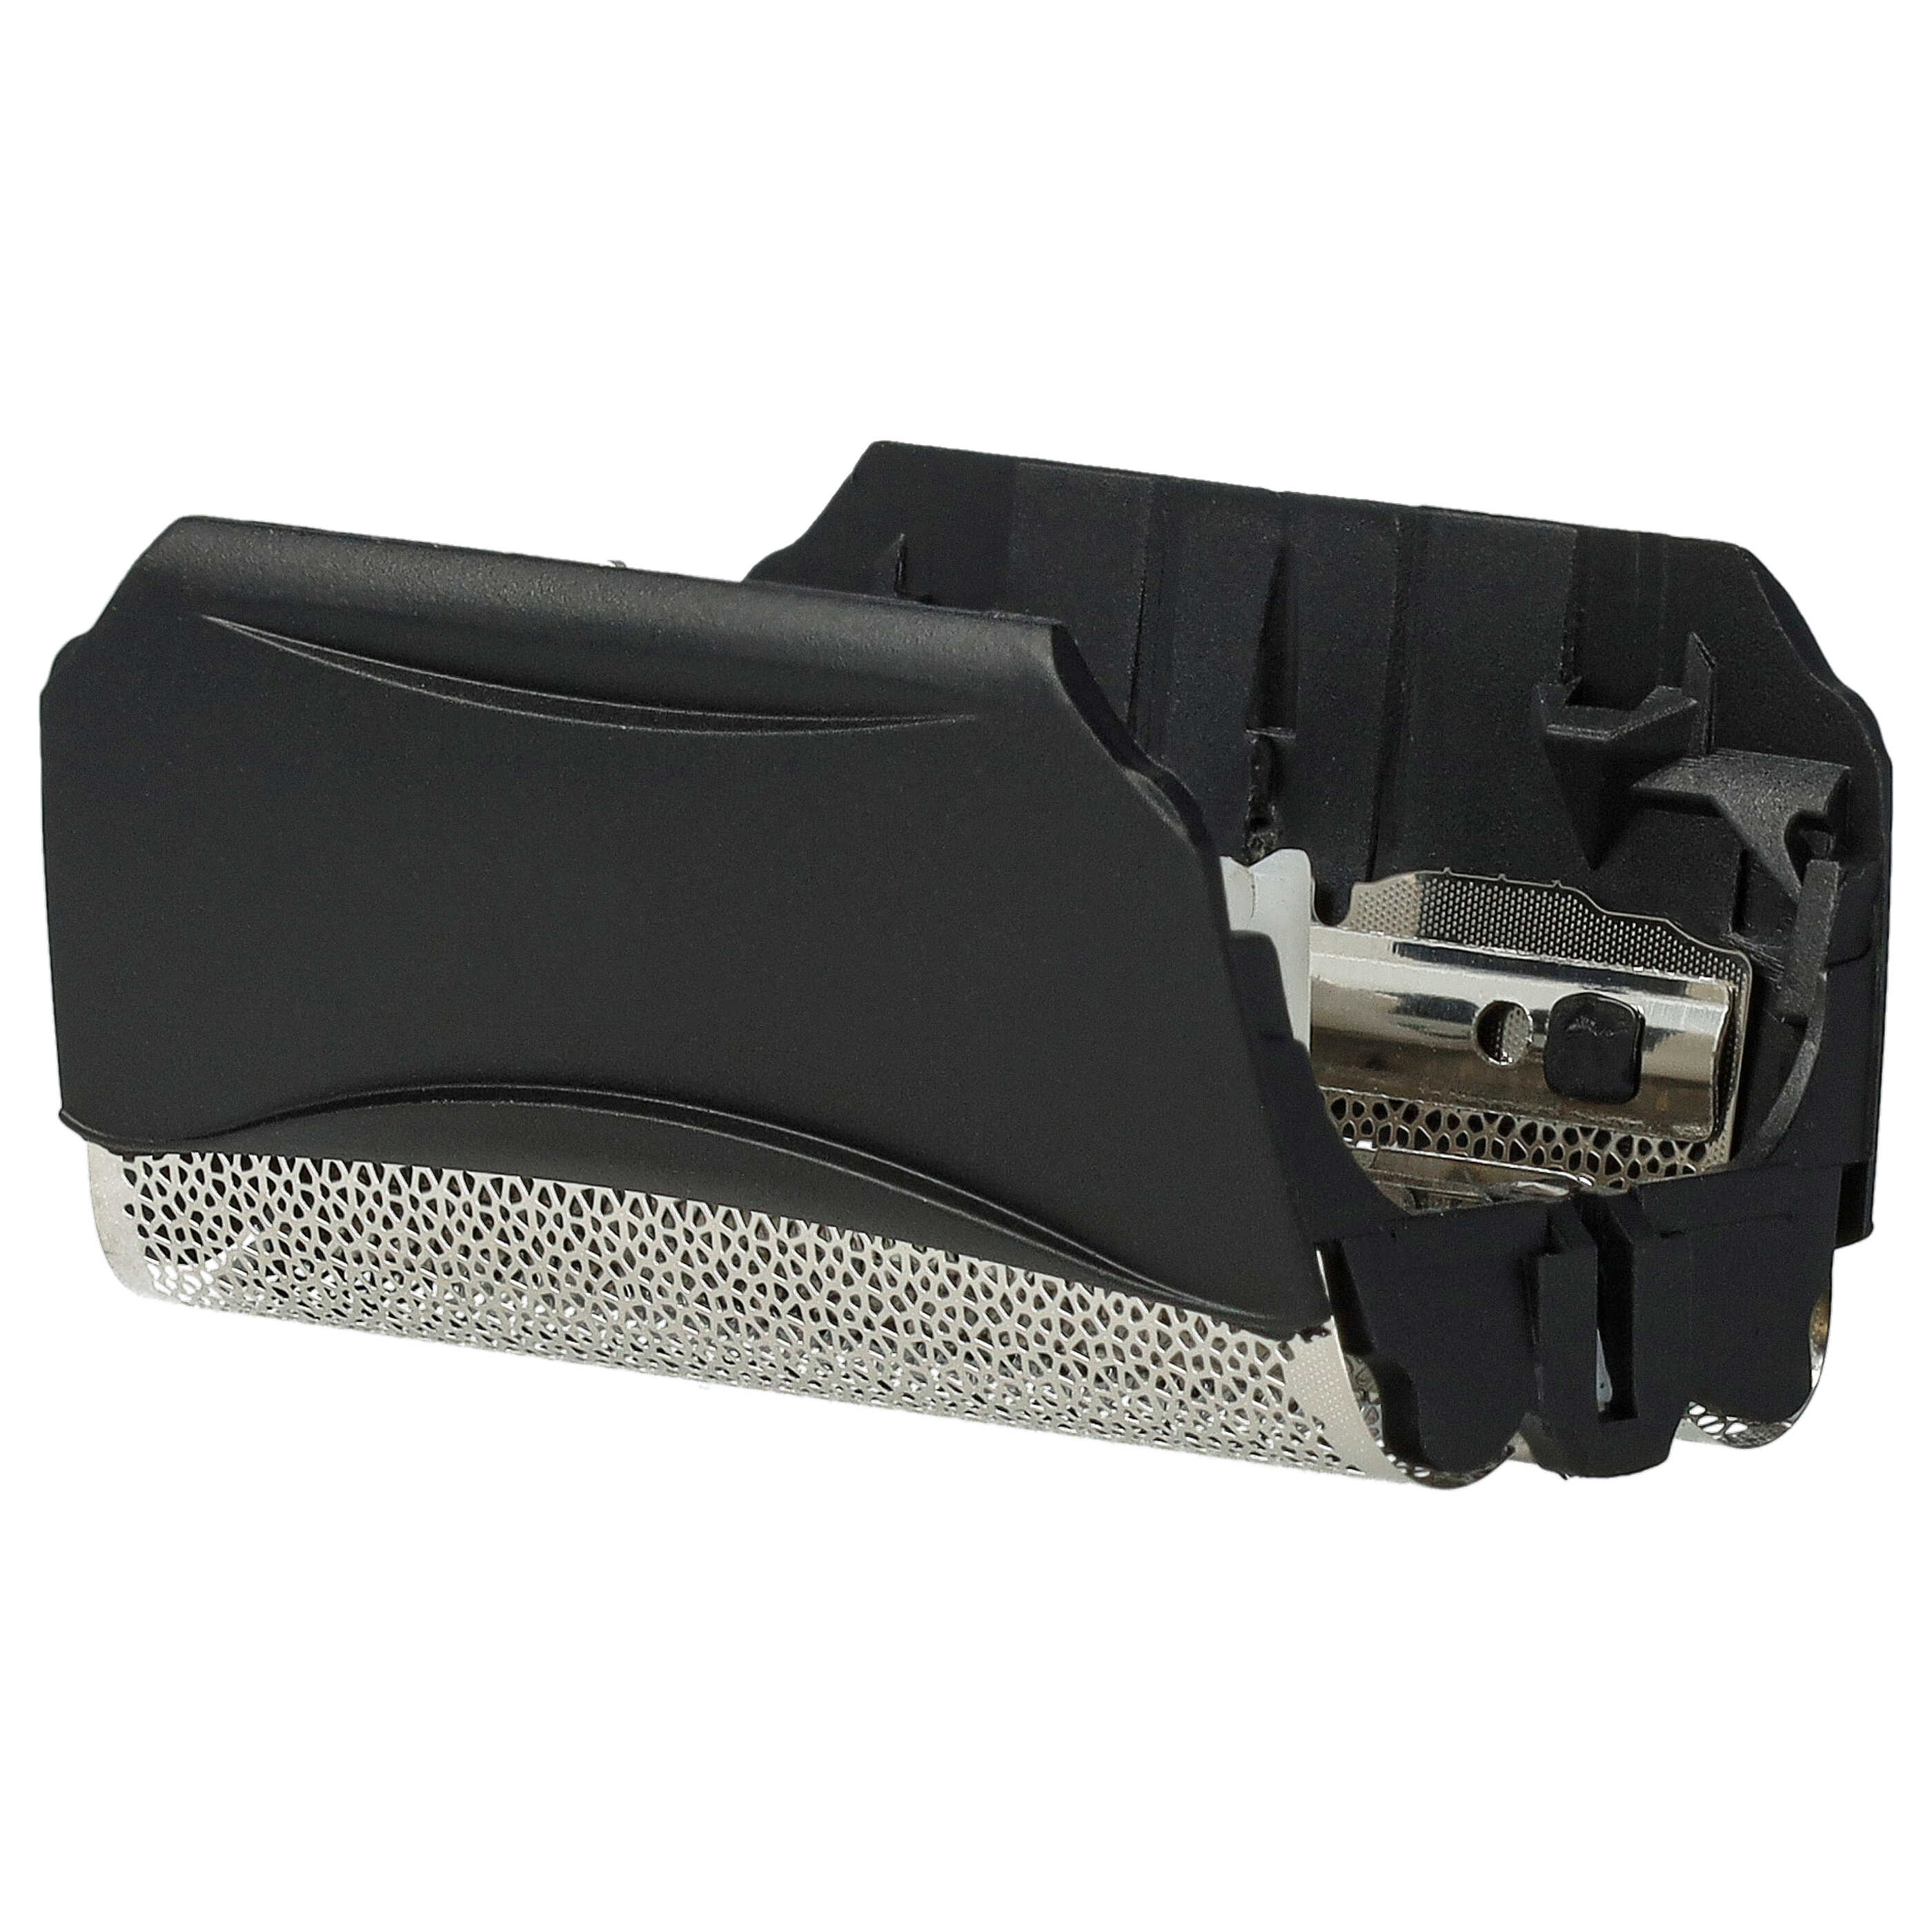 Dual Shaving Foil + Frame Cutter Block Set as Replacement for Braun 51B for Braun Razors - Shaving Parts Set